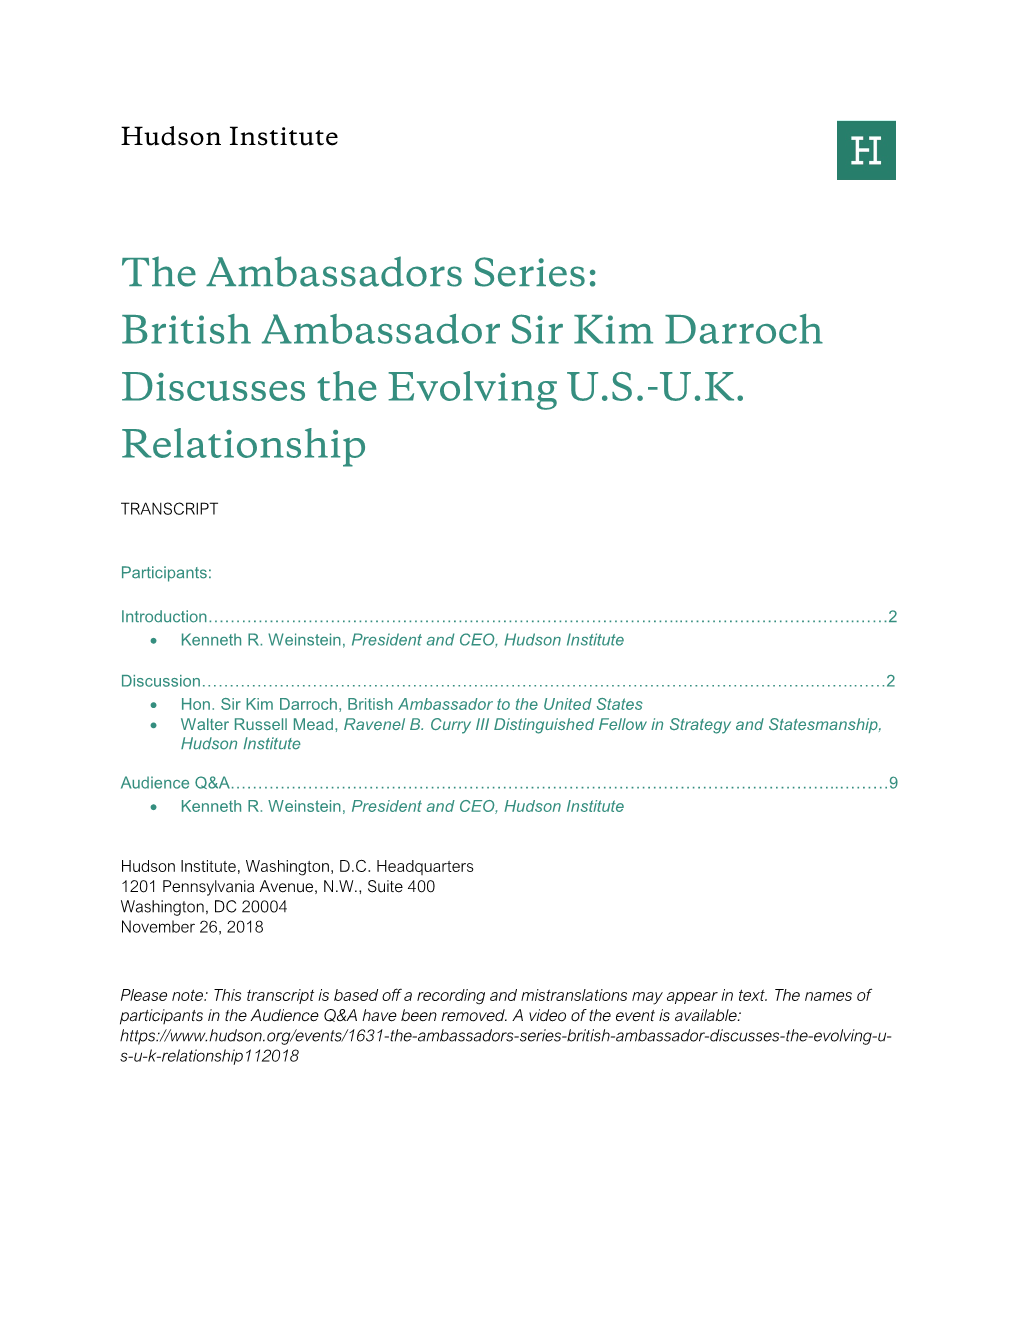 British Ambassador Sir Kim Darroch Discusses the Evolving US-UK